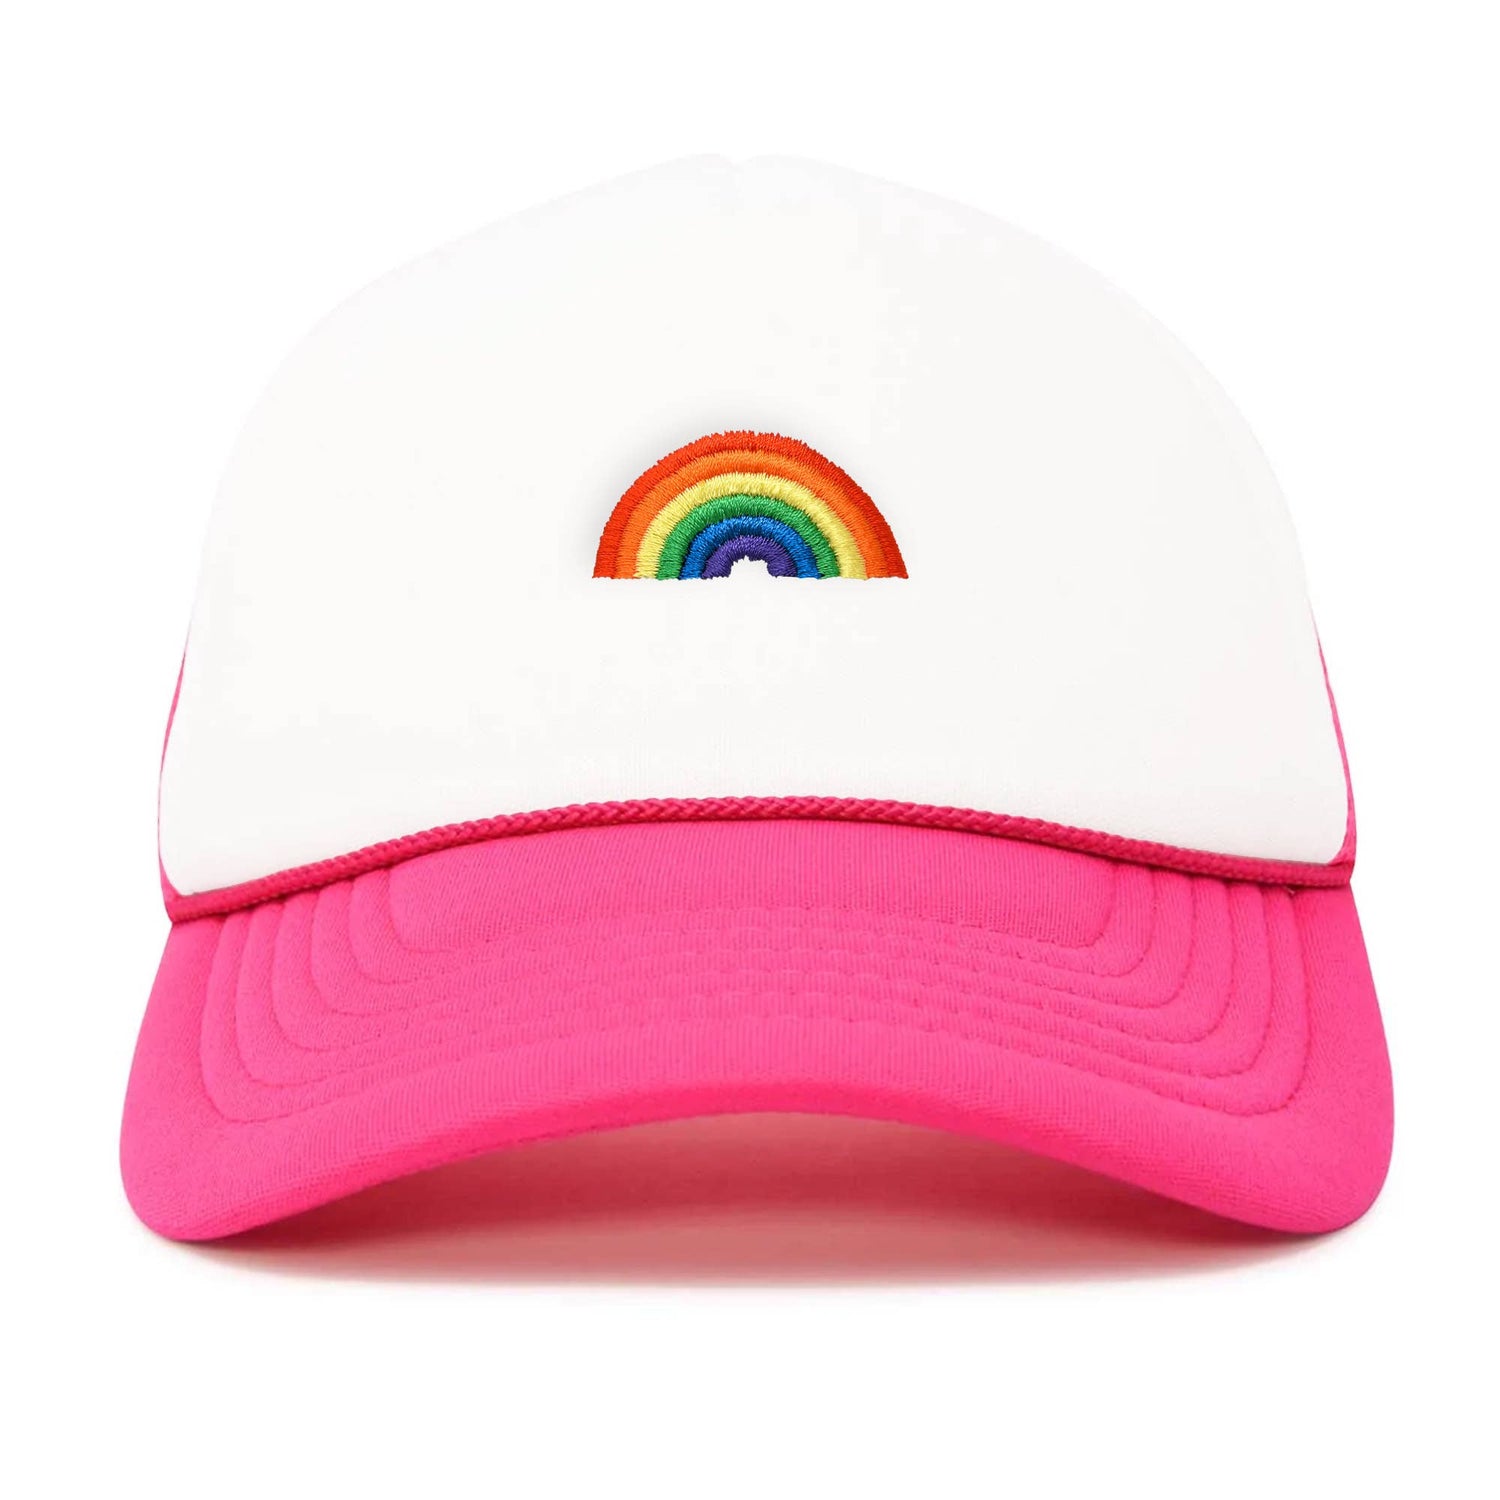 Rainbow Trucker Cap Hat - Hot Pink and White